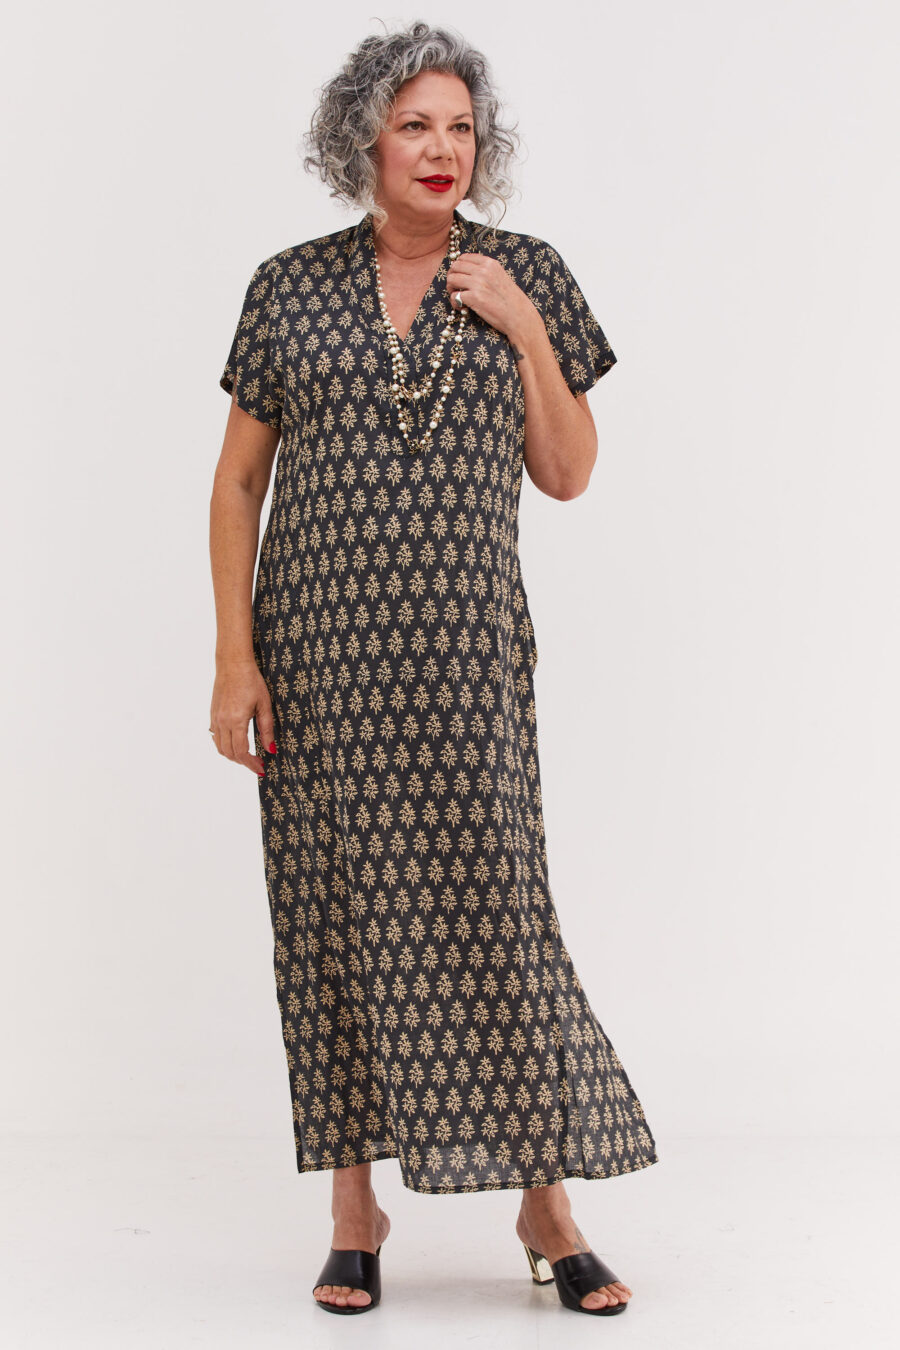 Jalabiya dress | Uniquely designed dress - Tokio print, black dress with cream colored oriental print by comfort zone boutique